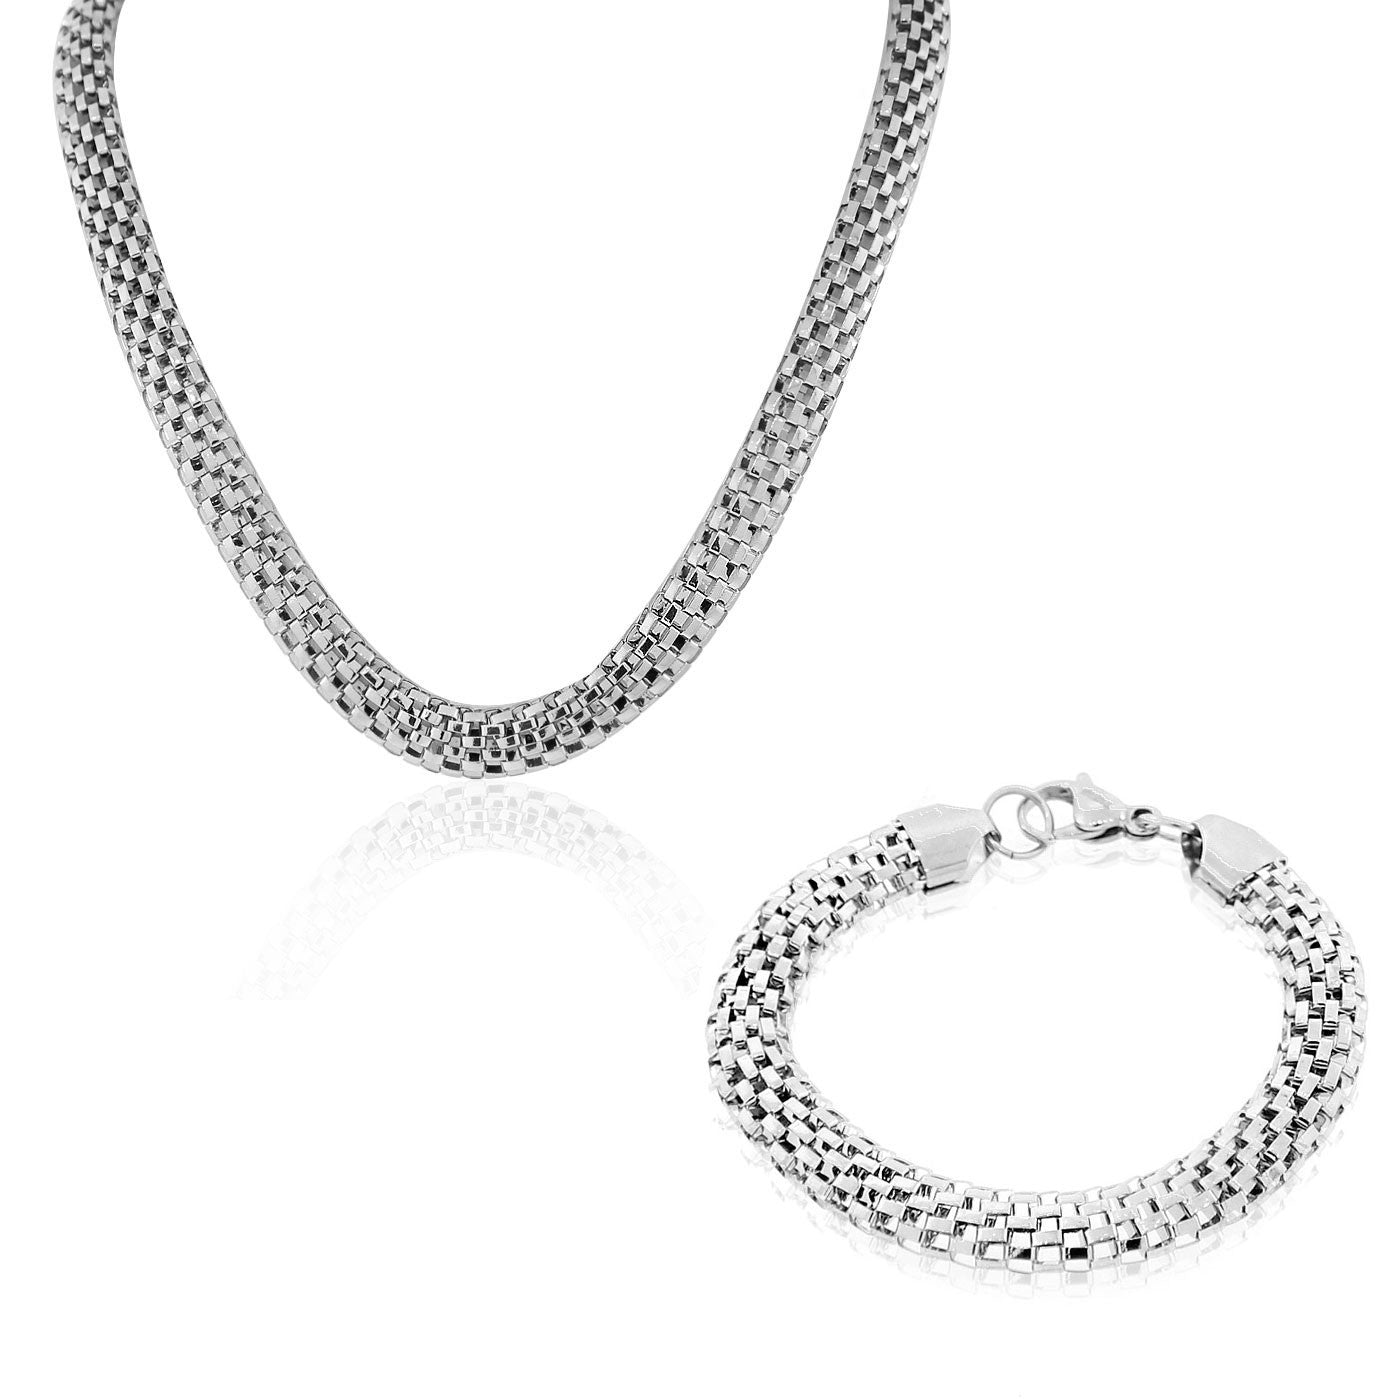 EDFORCE Stainless Steel Silver-Tone Mesh Necklace Bracelet Set 